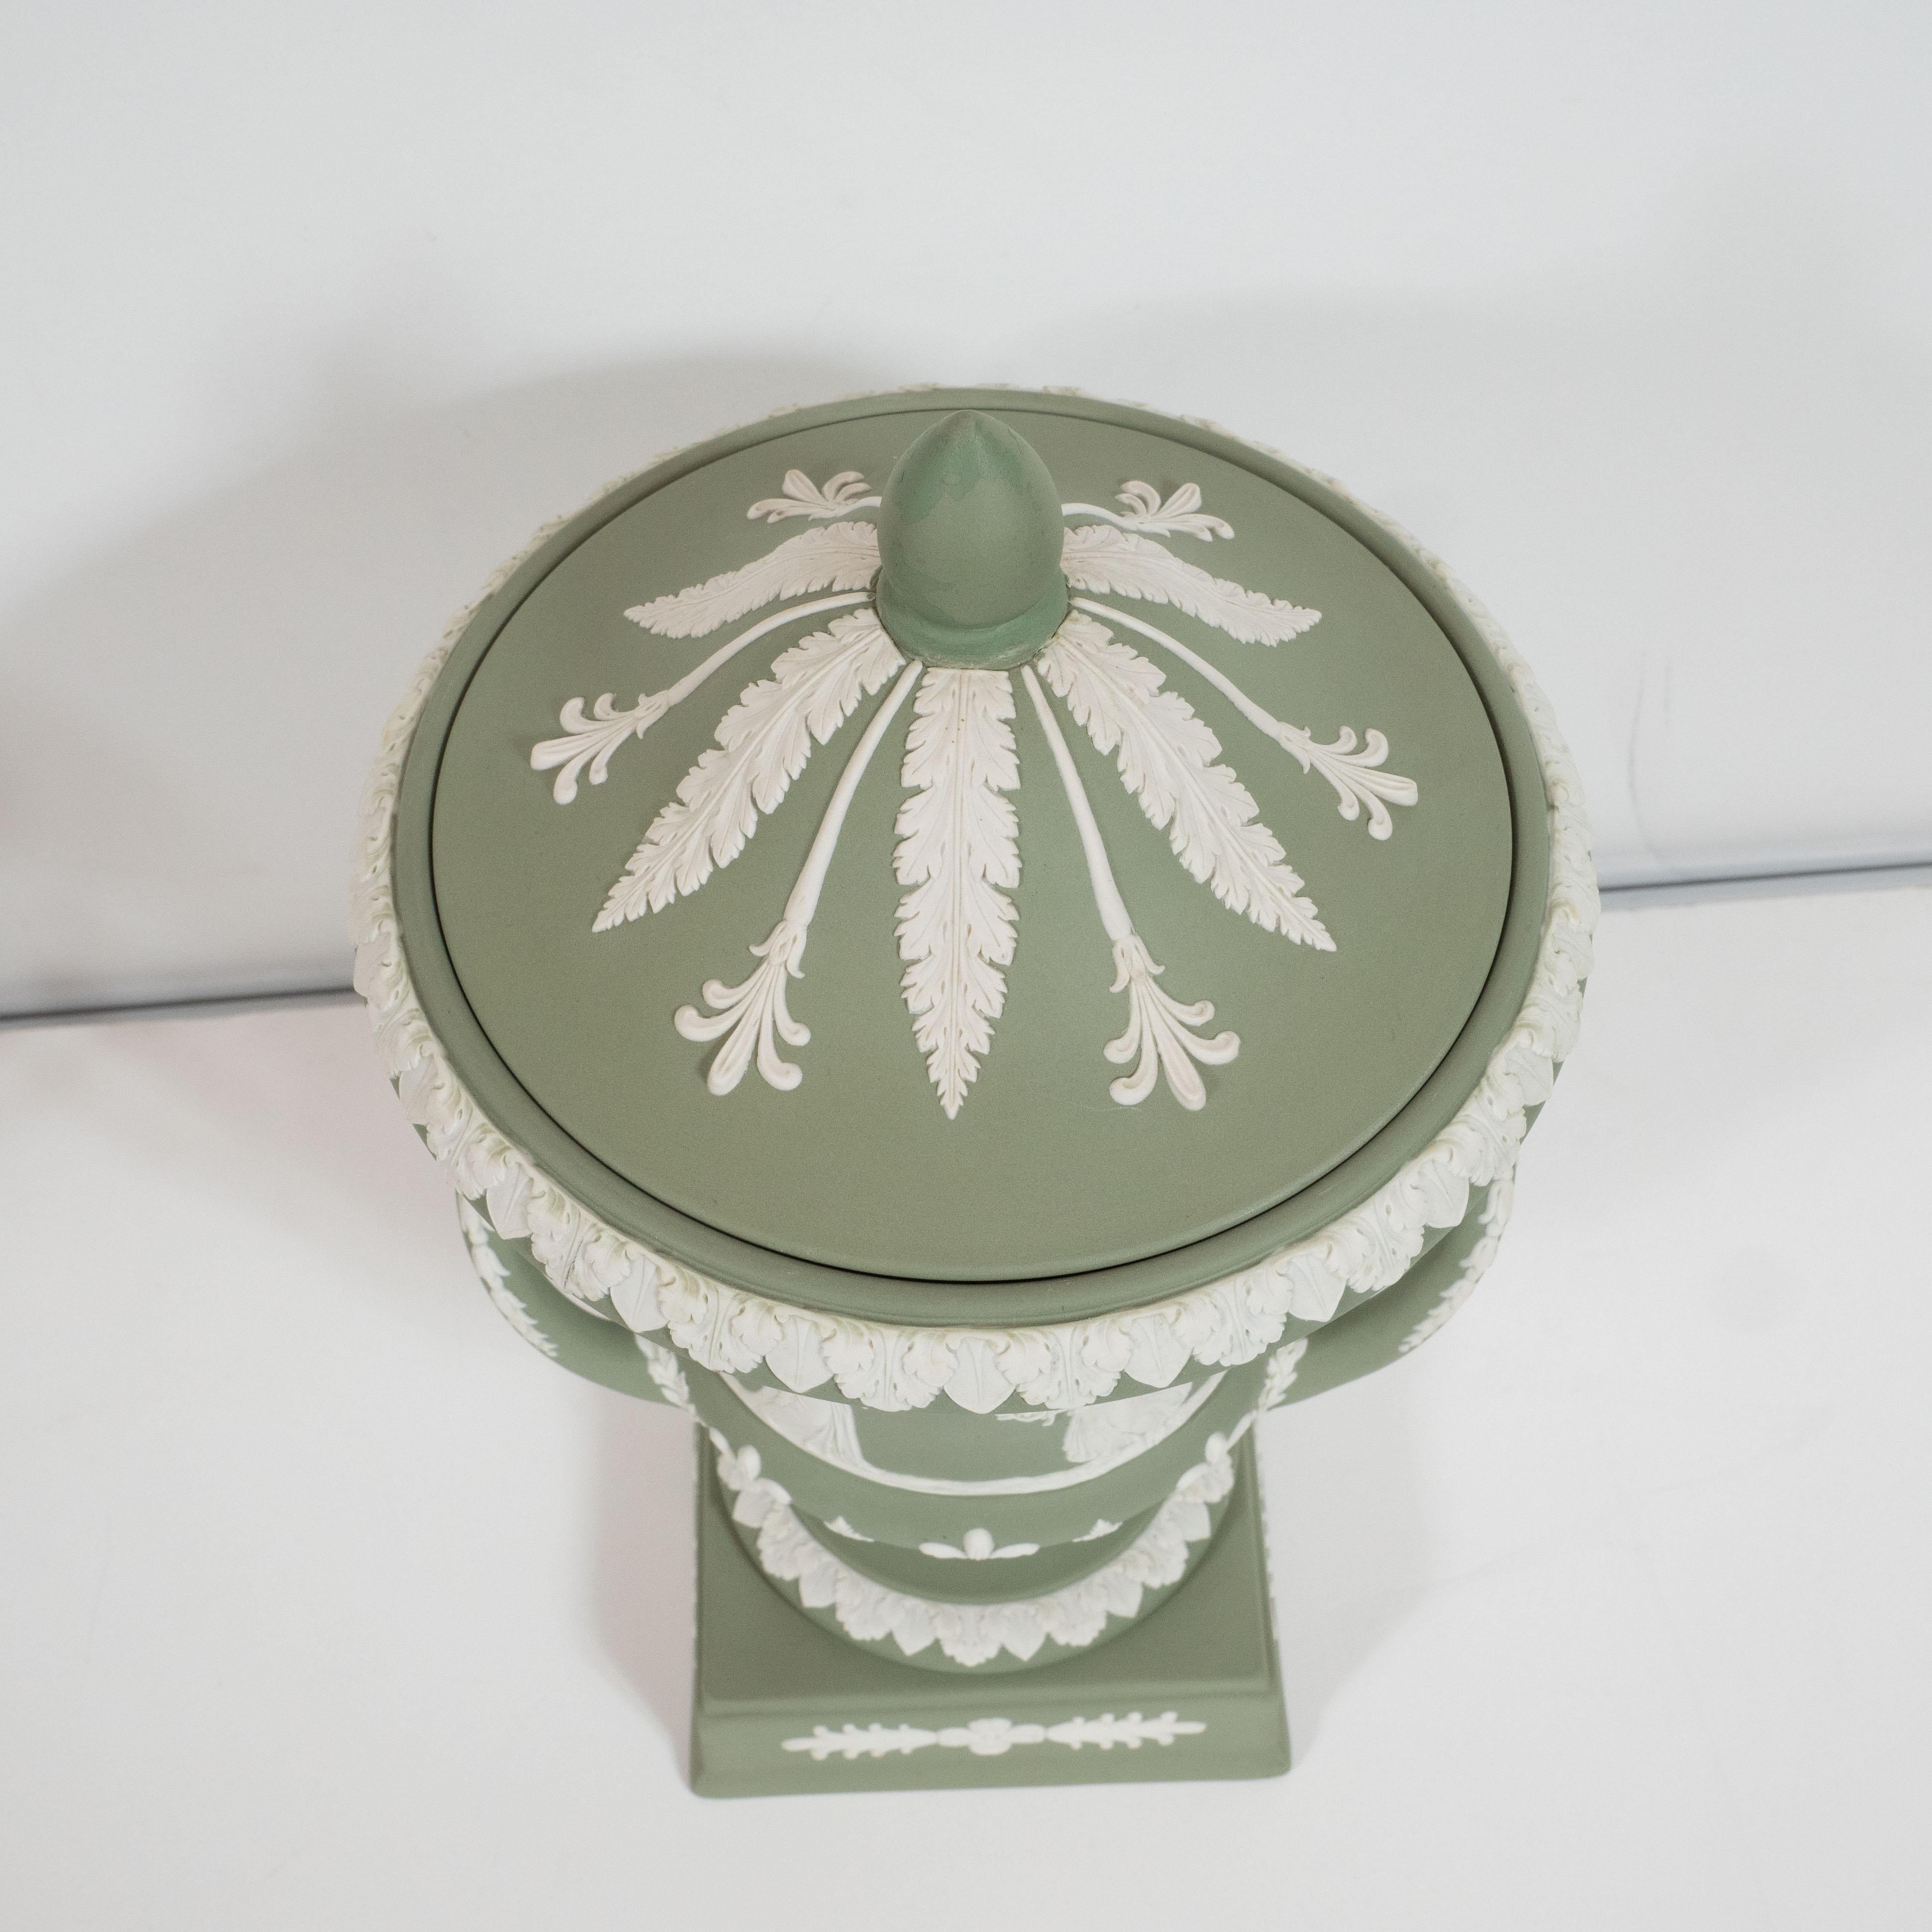 Neoclassical Jasperware Ceramic Covered Urn in Olive and White by Wedgwood 1